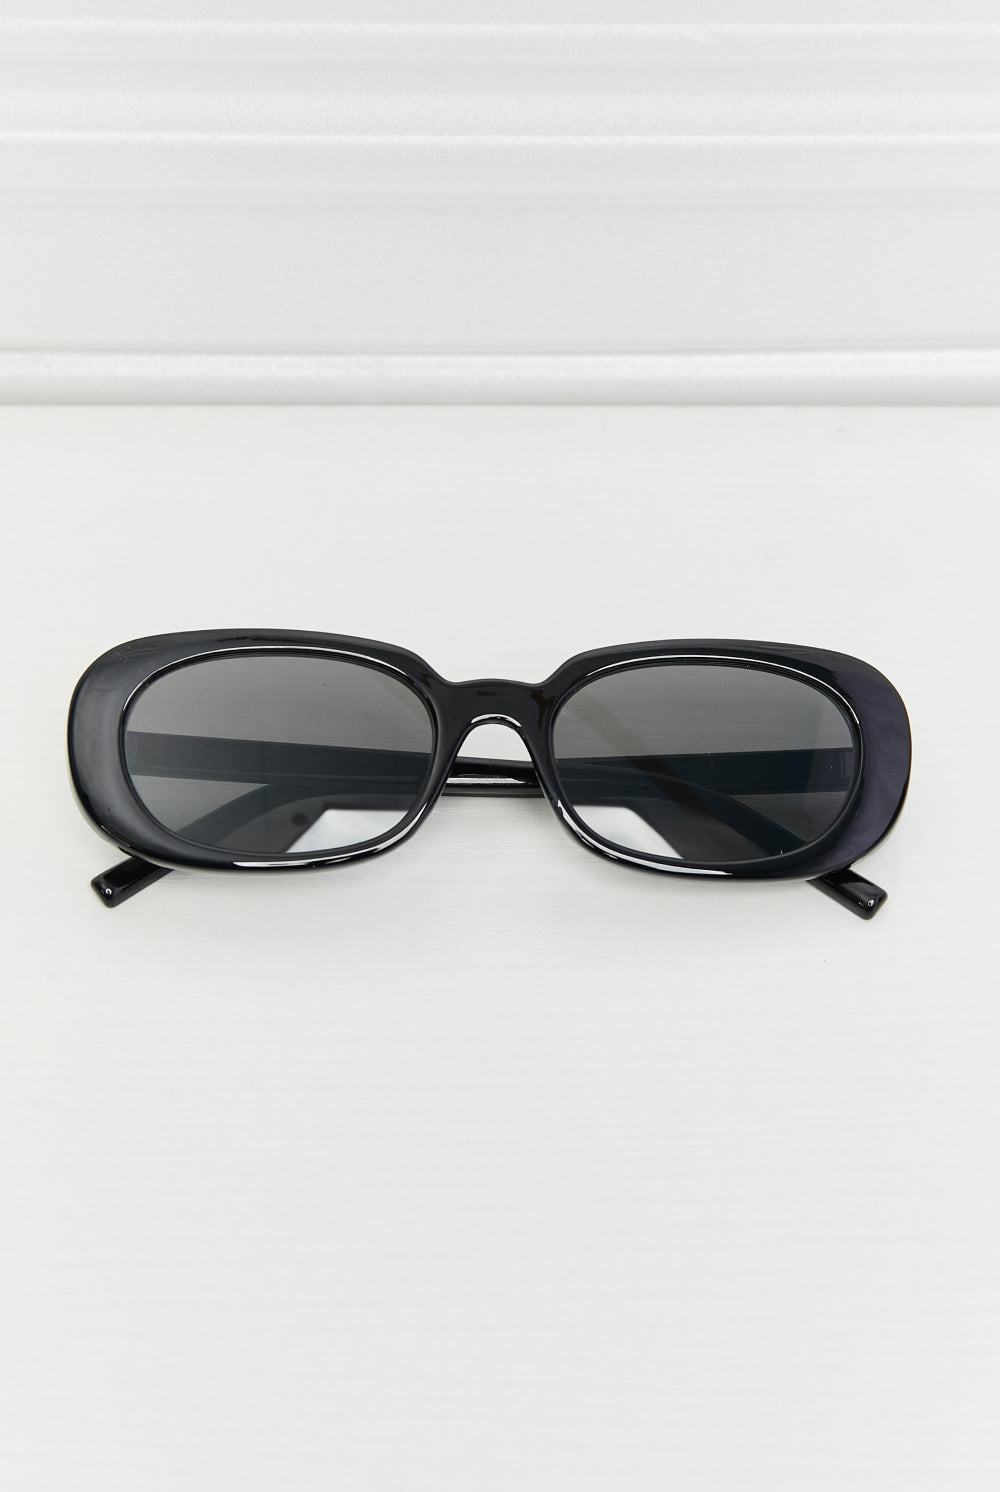 Beige Oval Full Rim Sunglasses Accessories